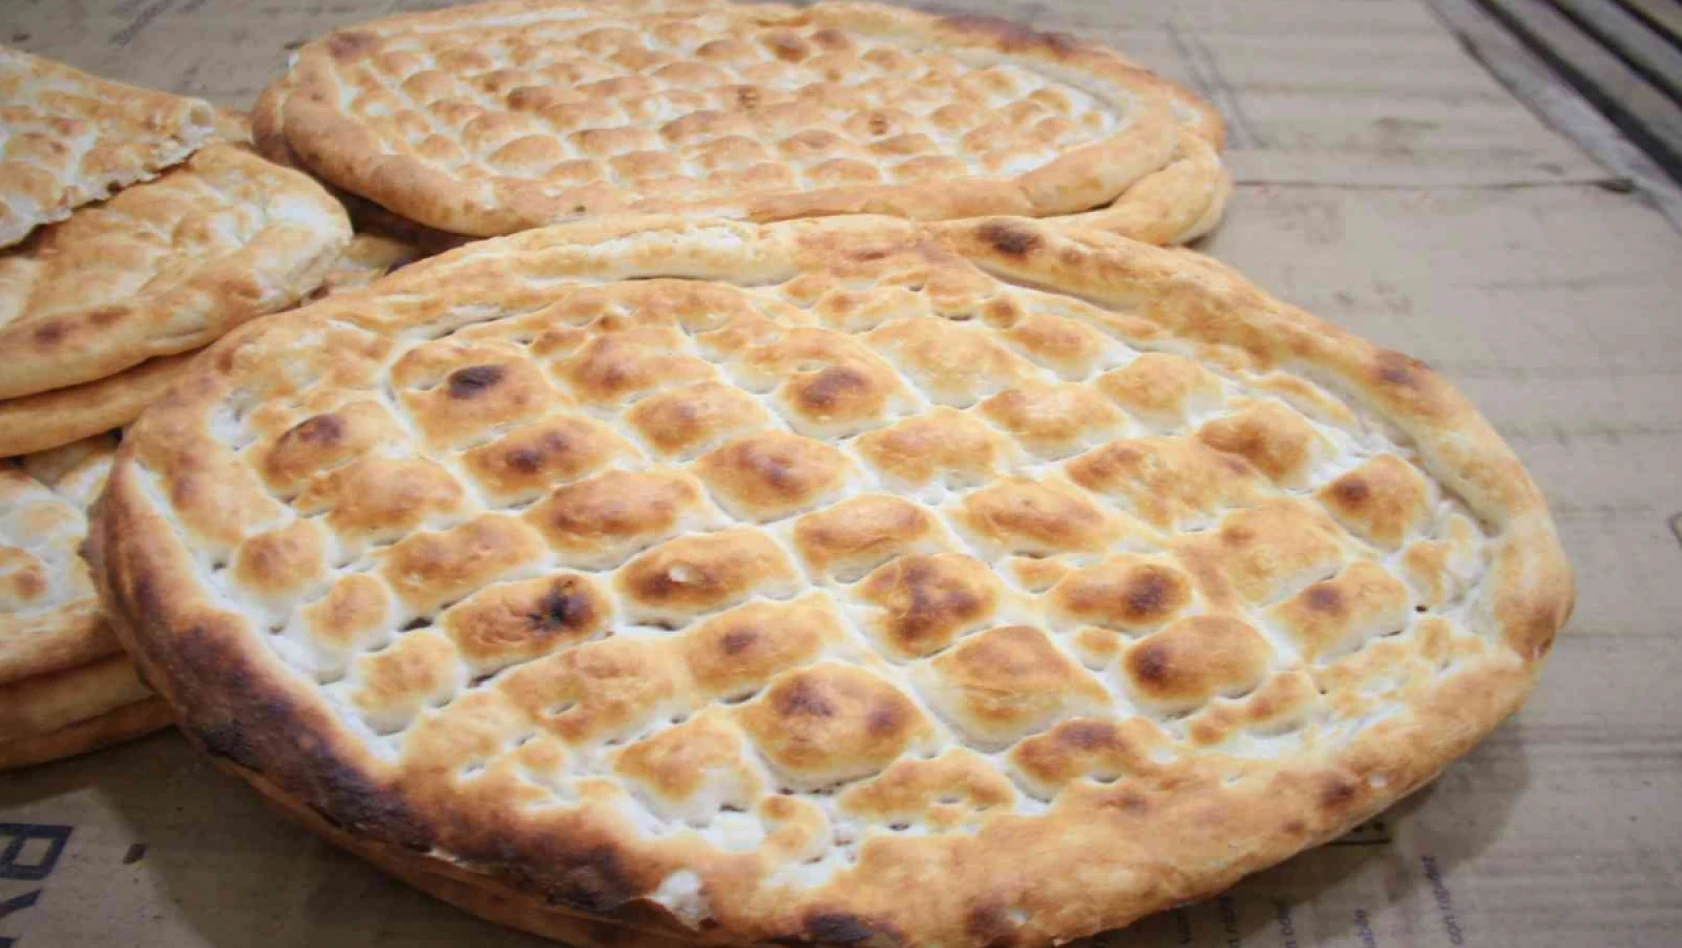 Elazığ'da 200 gram ekmek 5 lira oldu